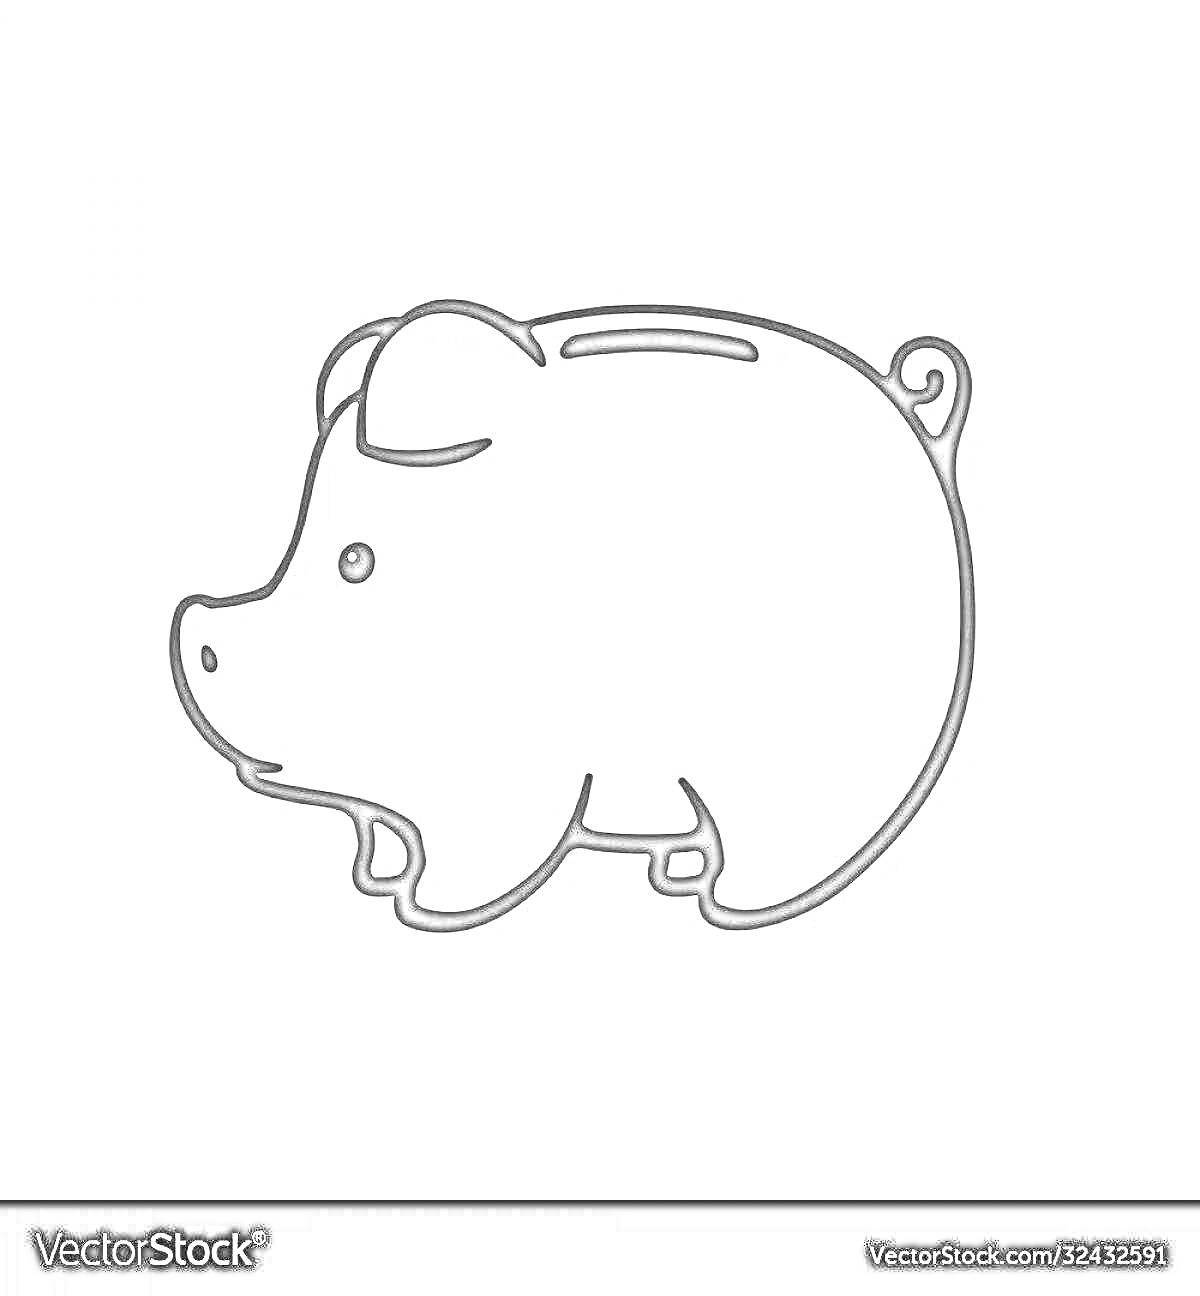 Раскраска Копилка свинка с прорезью для монет